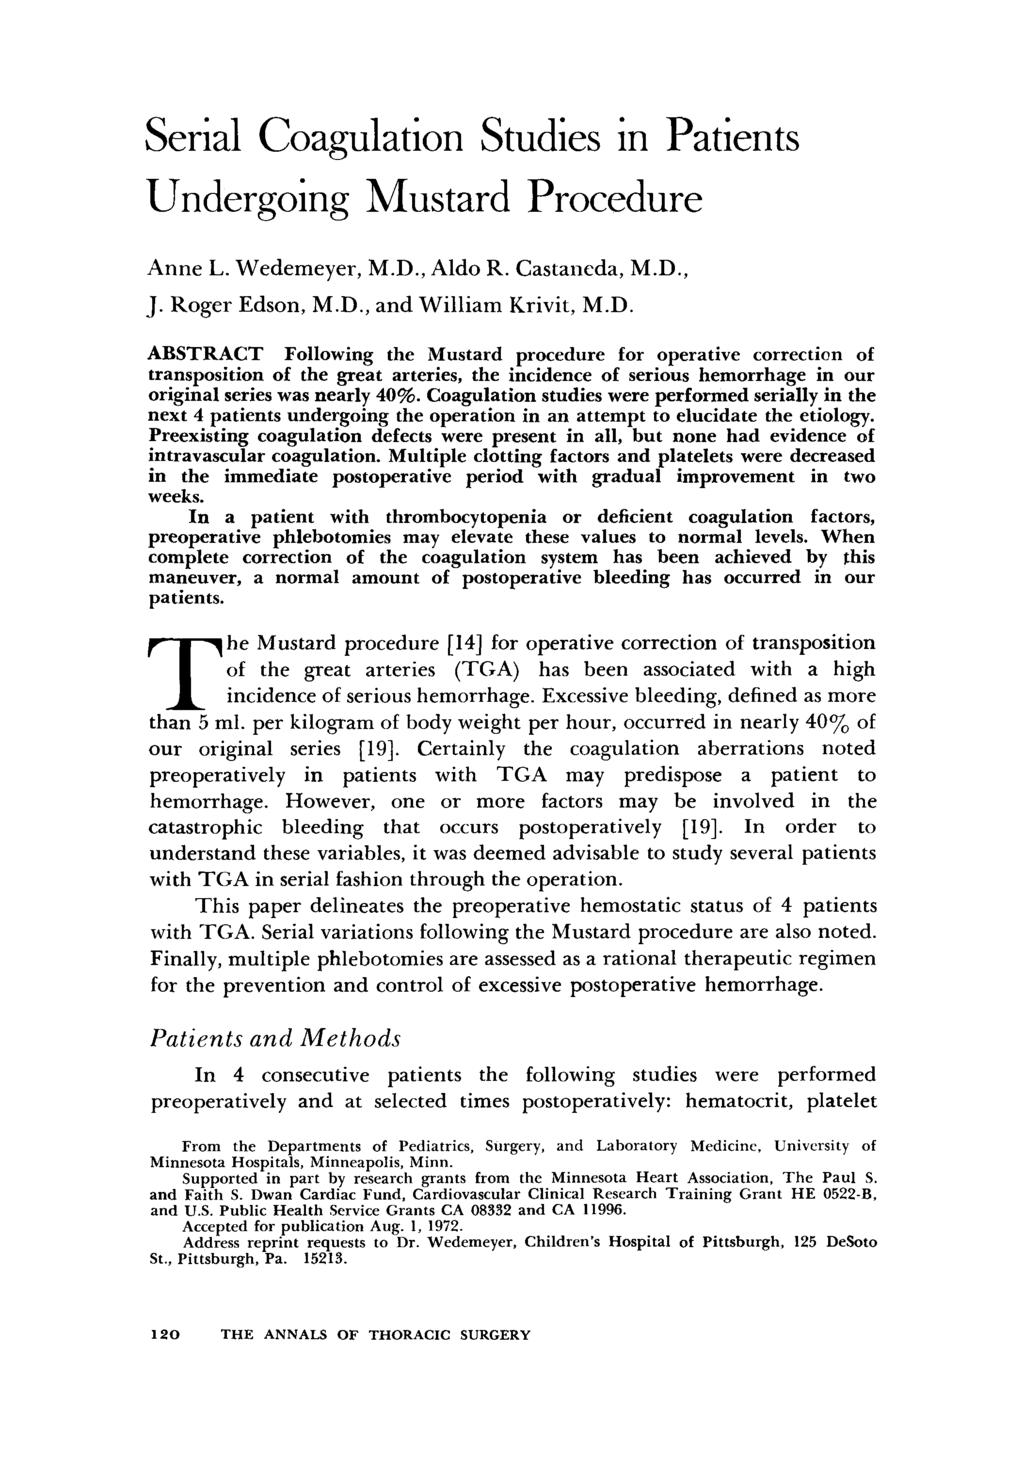 Serial Coagulation Studies in Patients Undergoing Mustard Procedure Anne L. Wedemeyer, M.D.